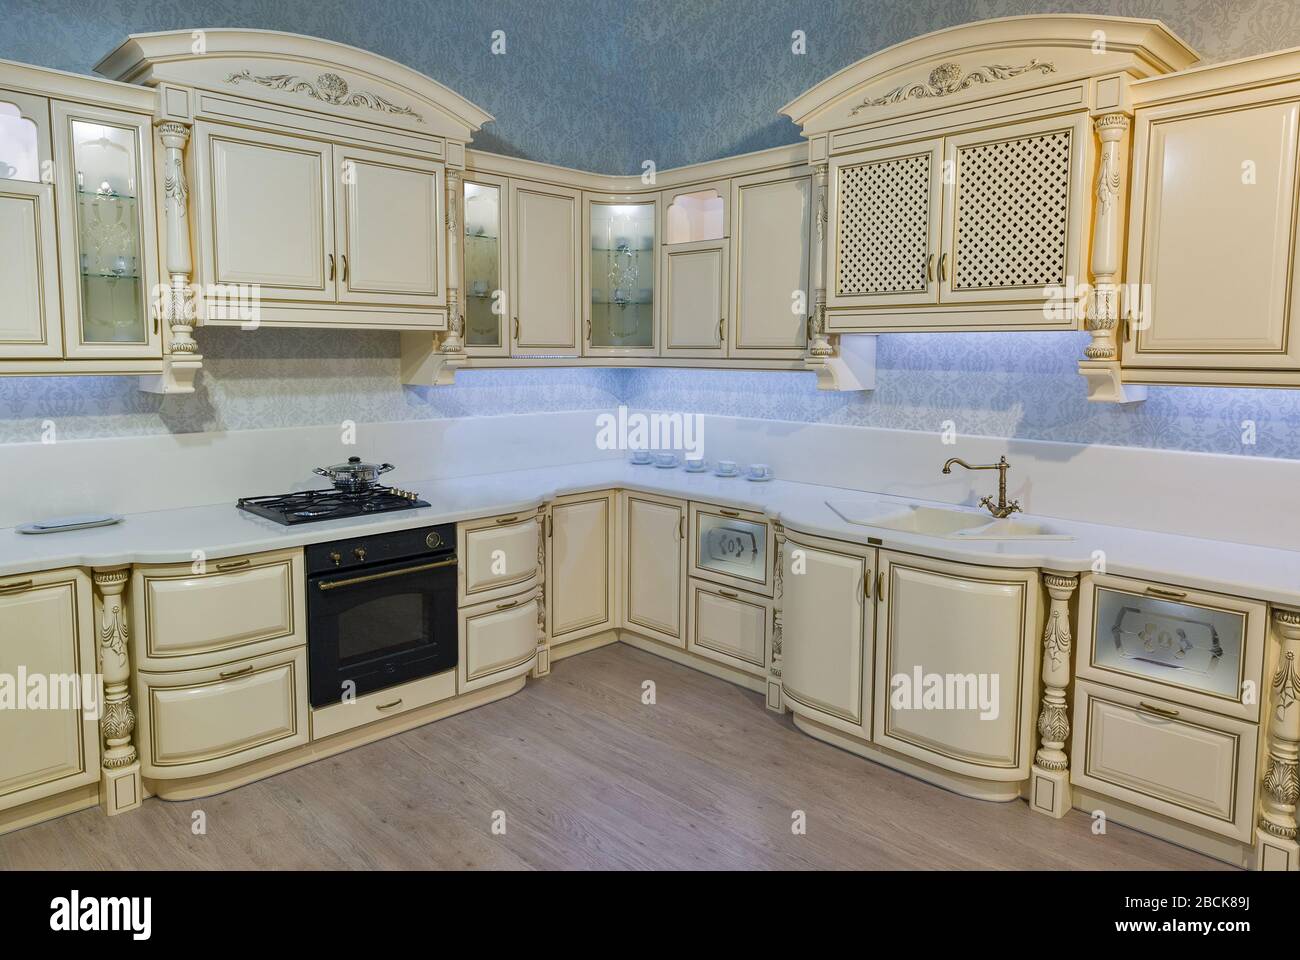 Arredi moderni da cucina in stile barocco Foto stock - Alamy